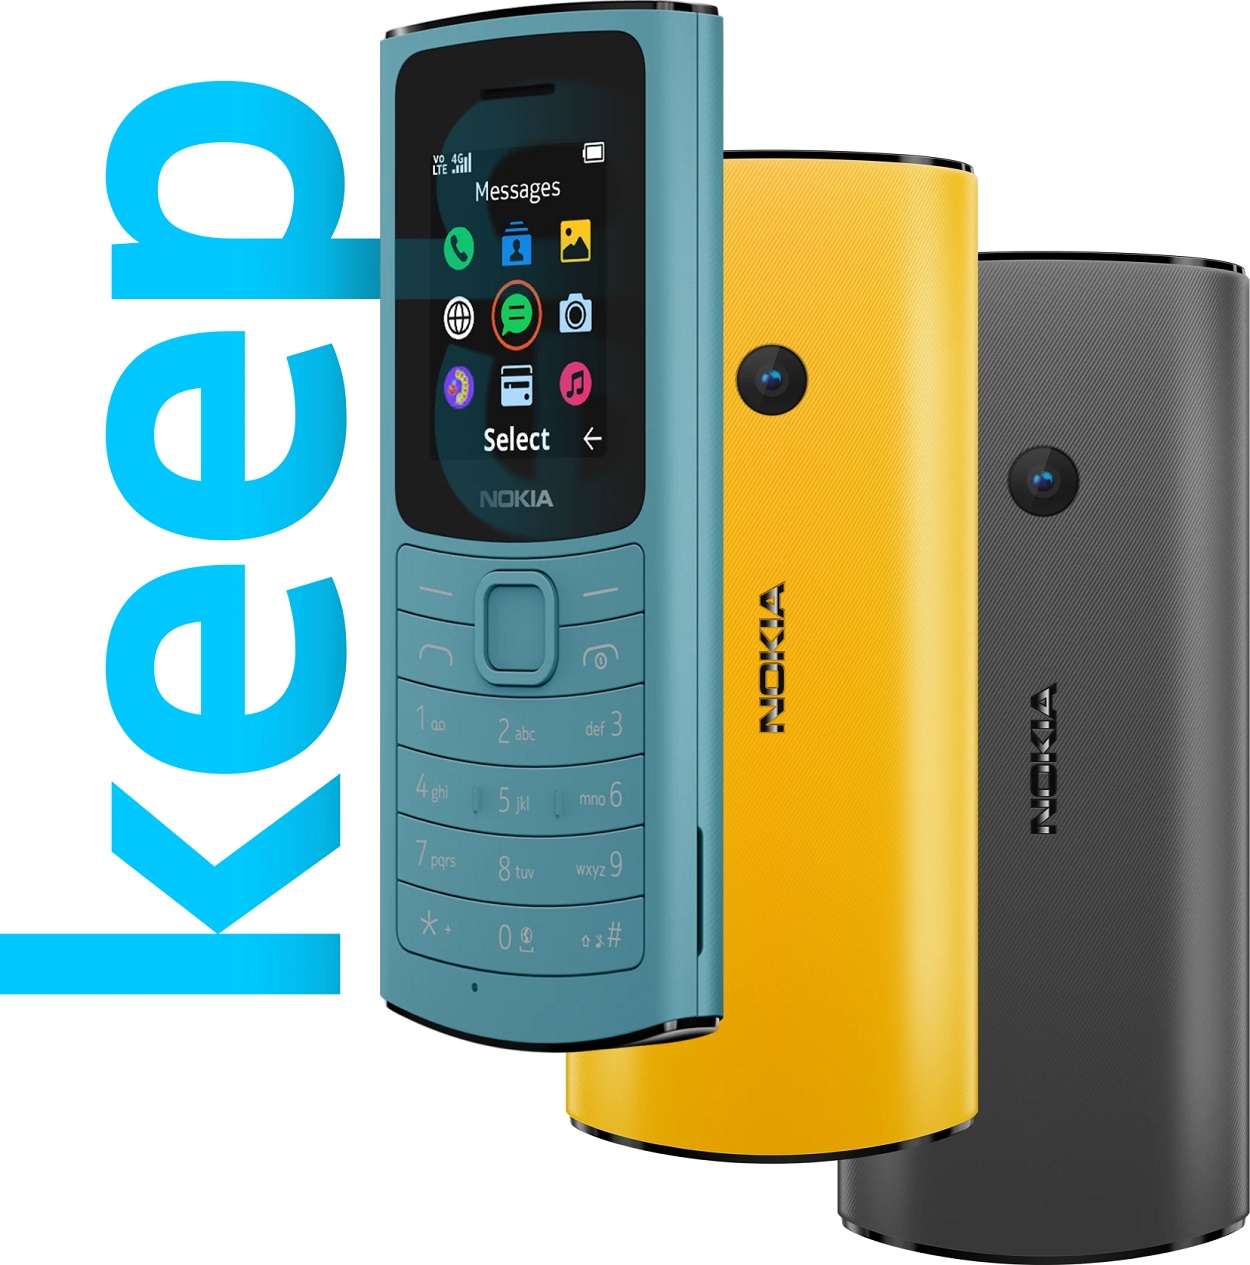 Nokia 2660 Flip in Pink review : Flip to the Fun Side! - Nokiapoweruser